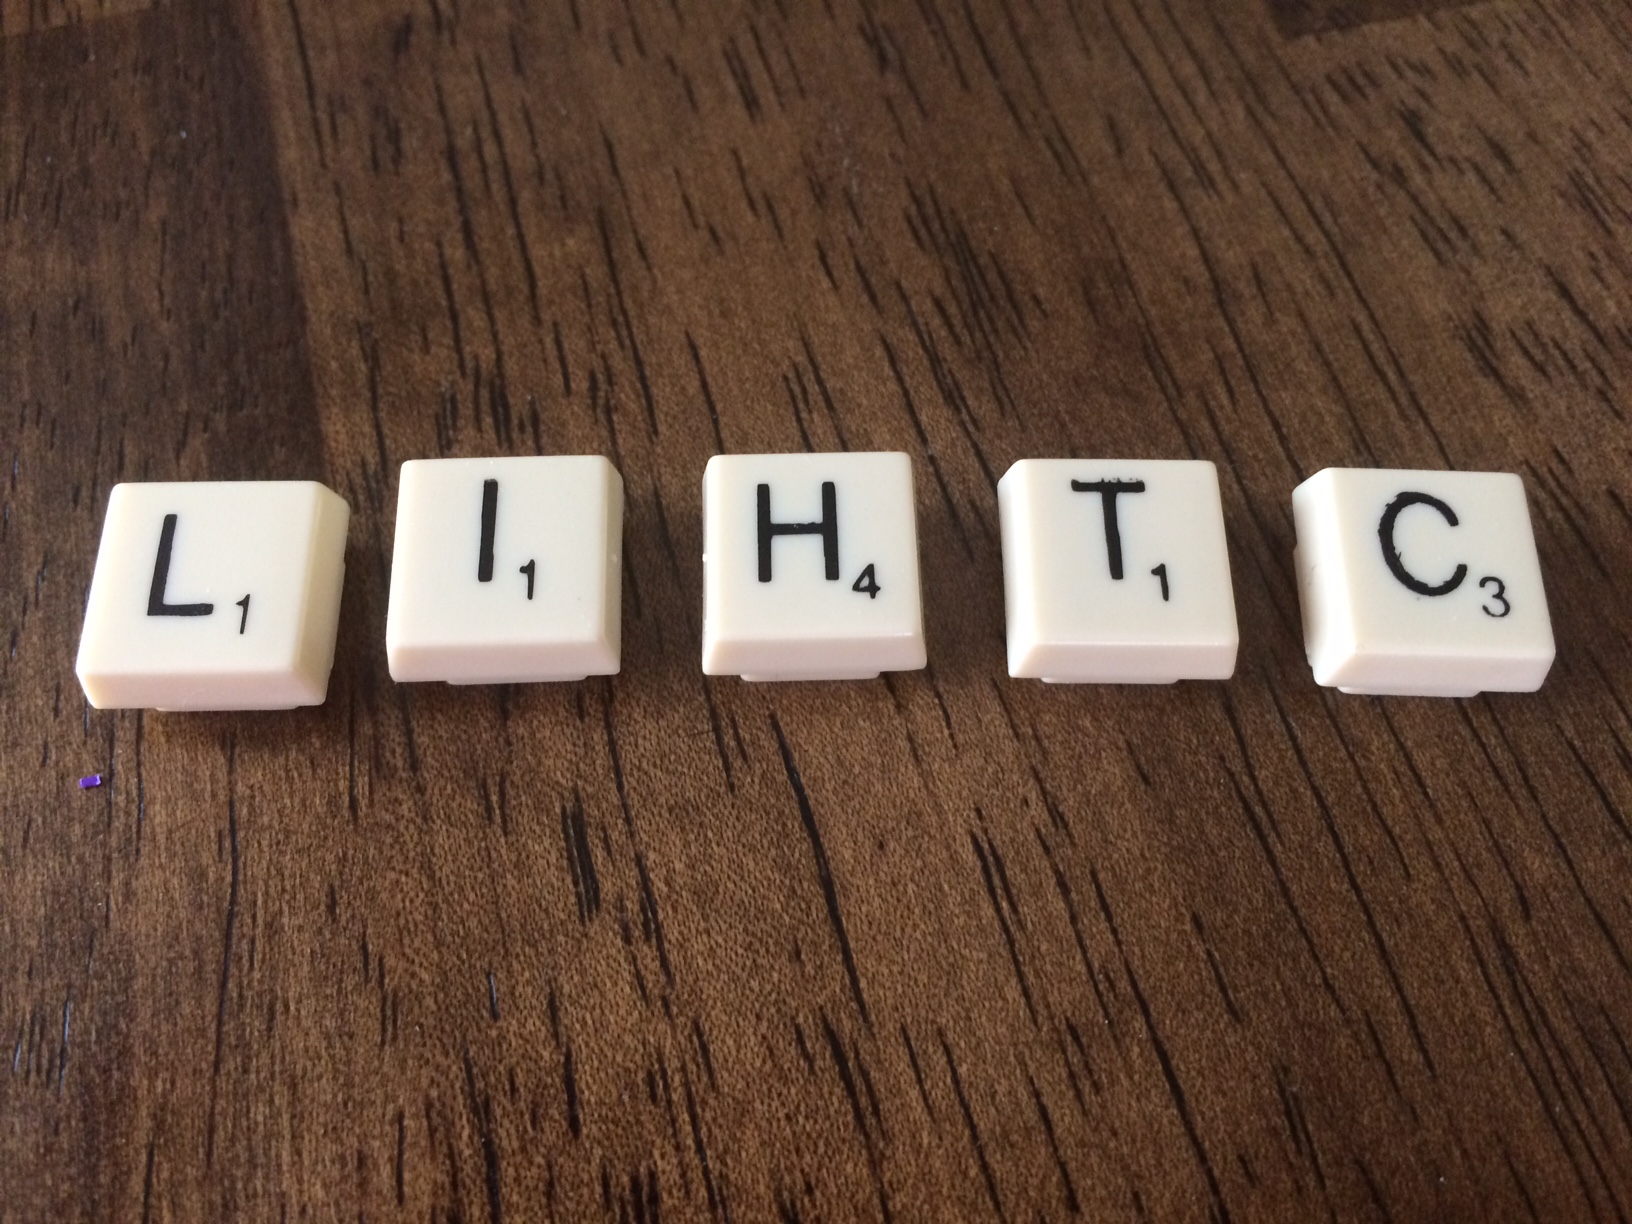 Scrabble letters that show LIHTC